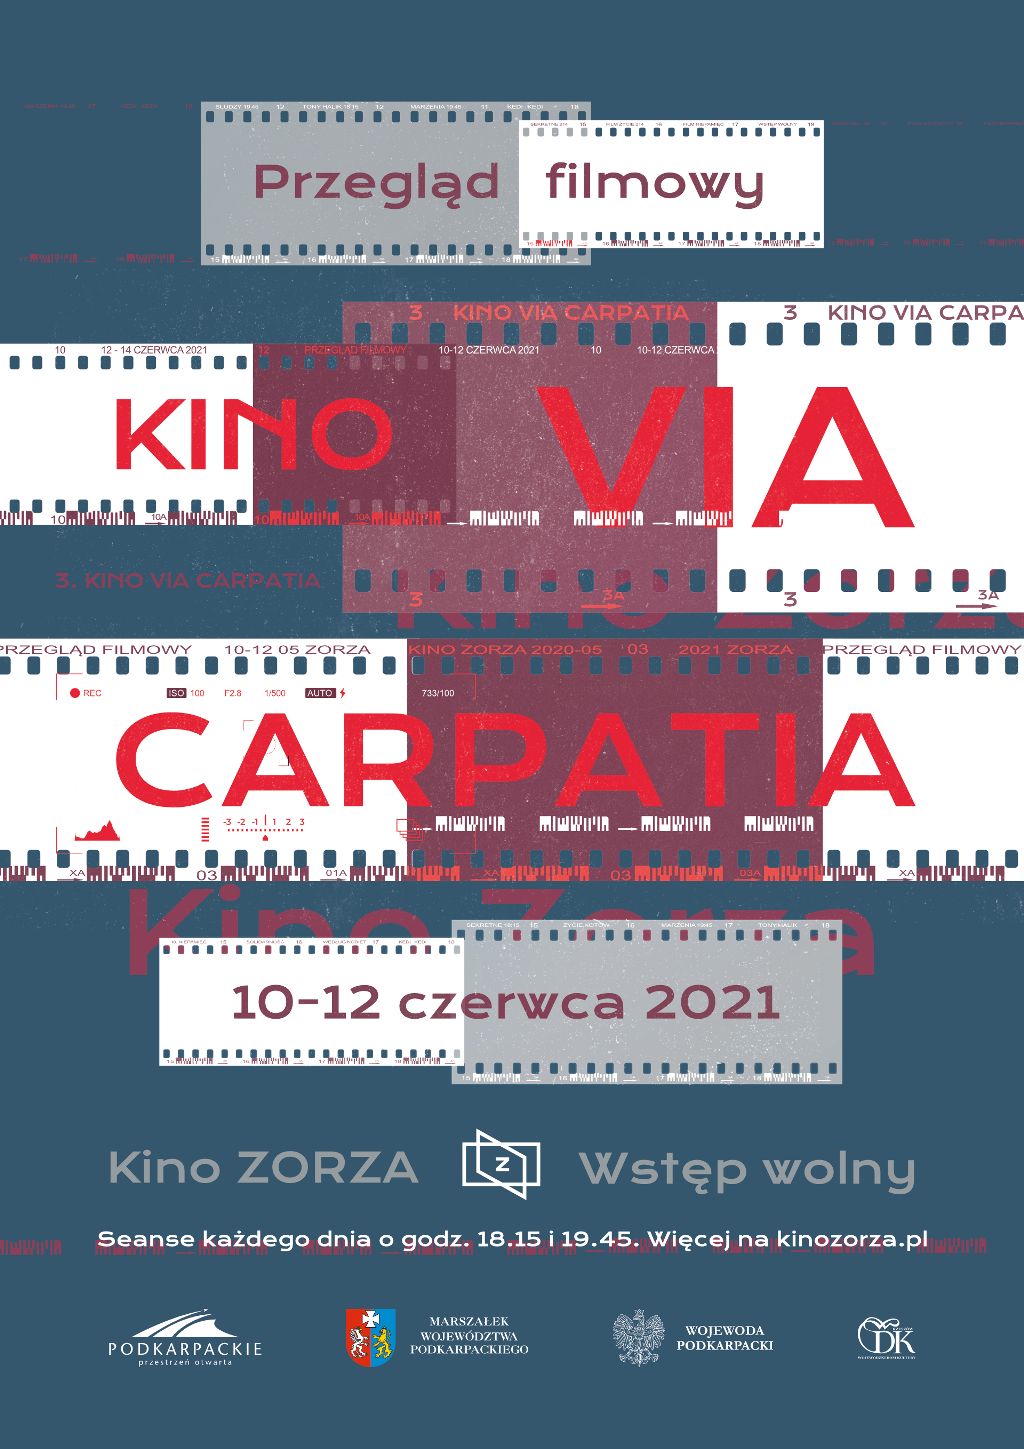 KinoViaCarpatia